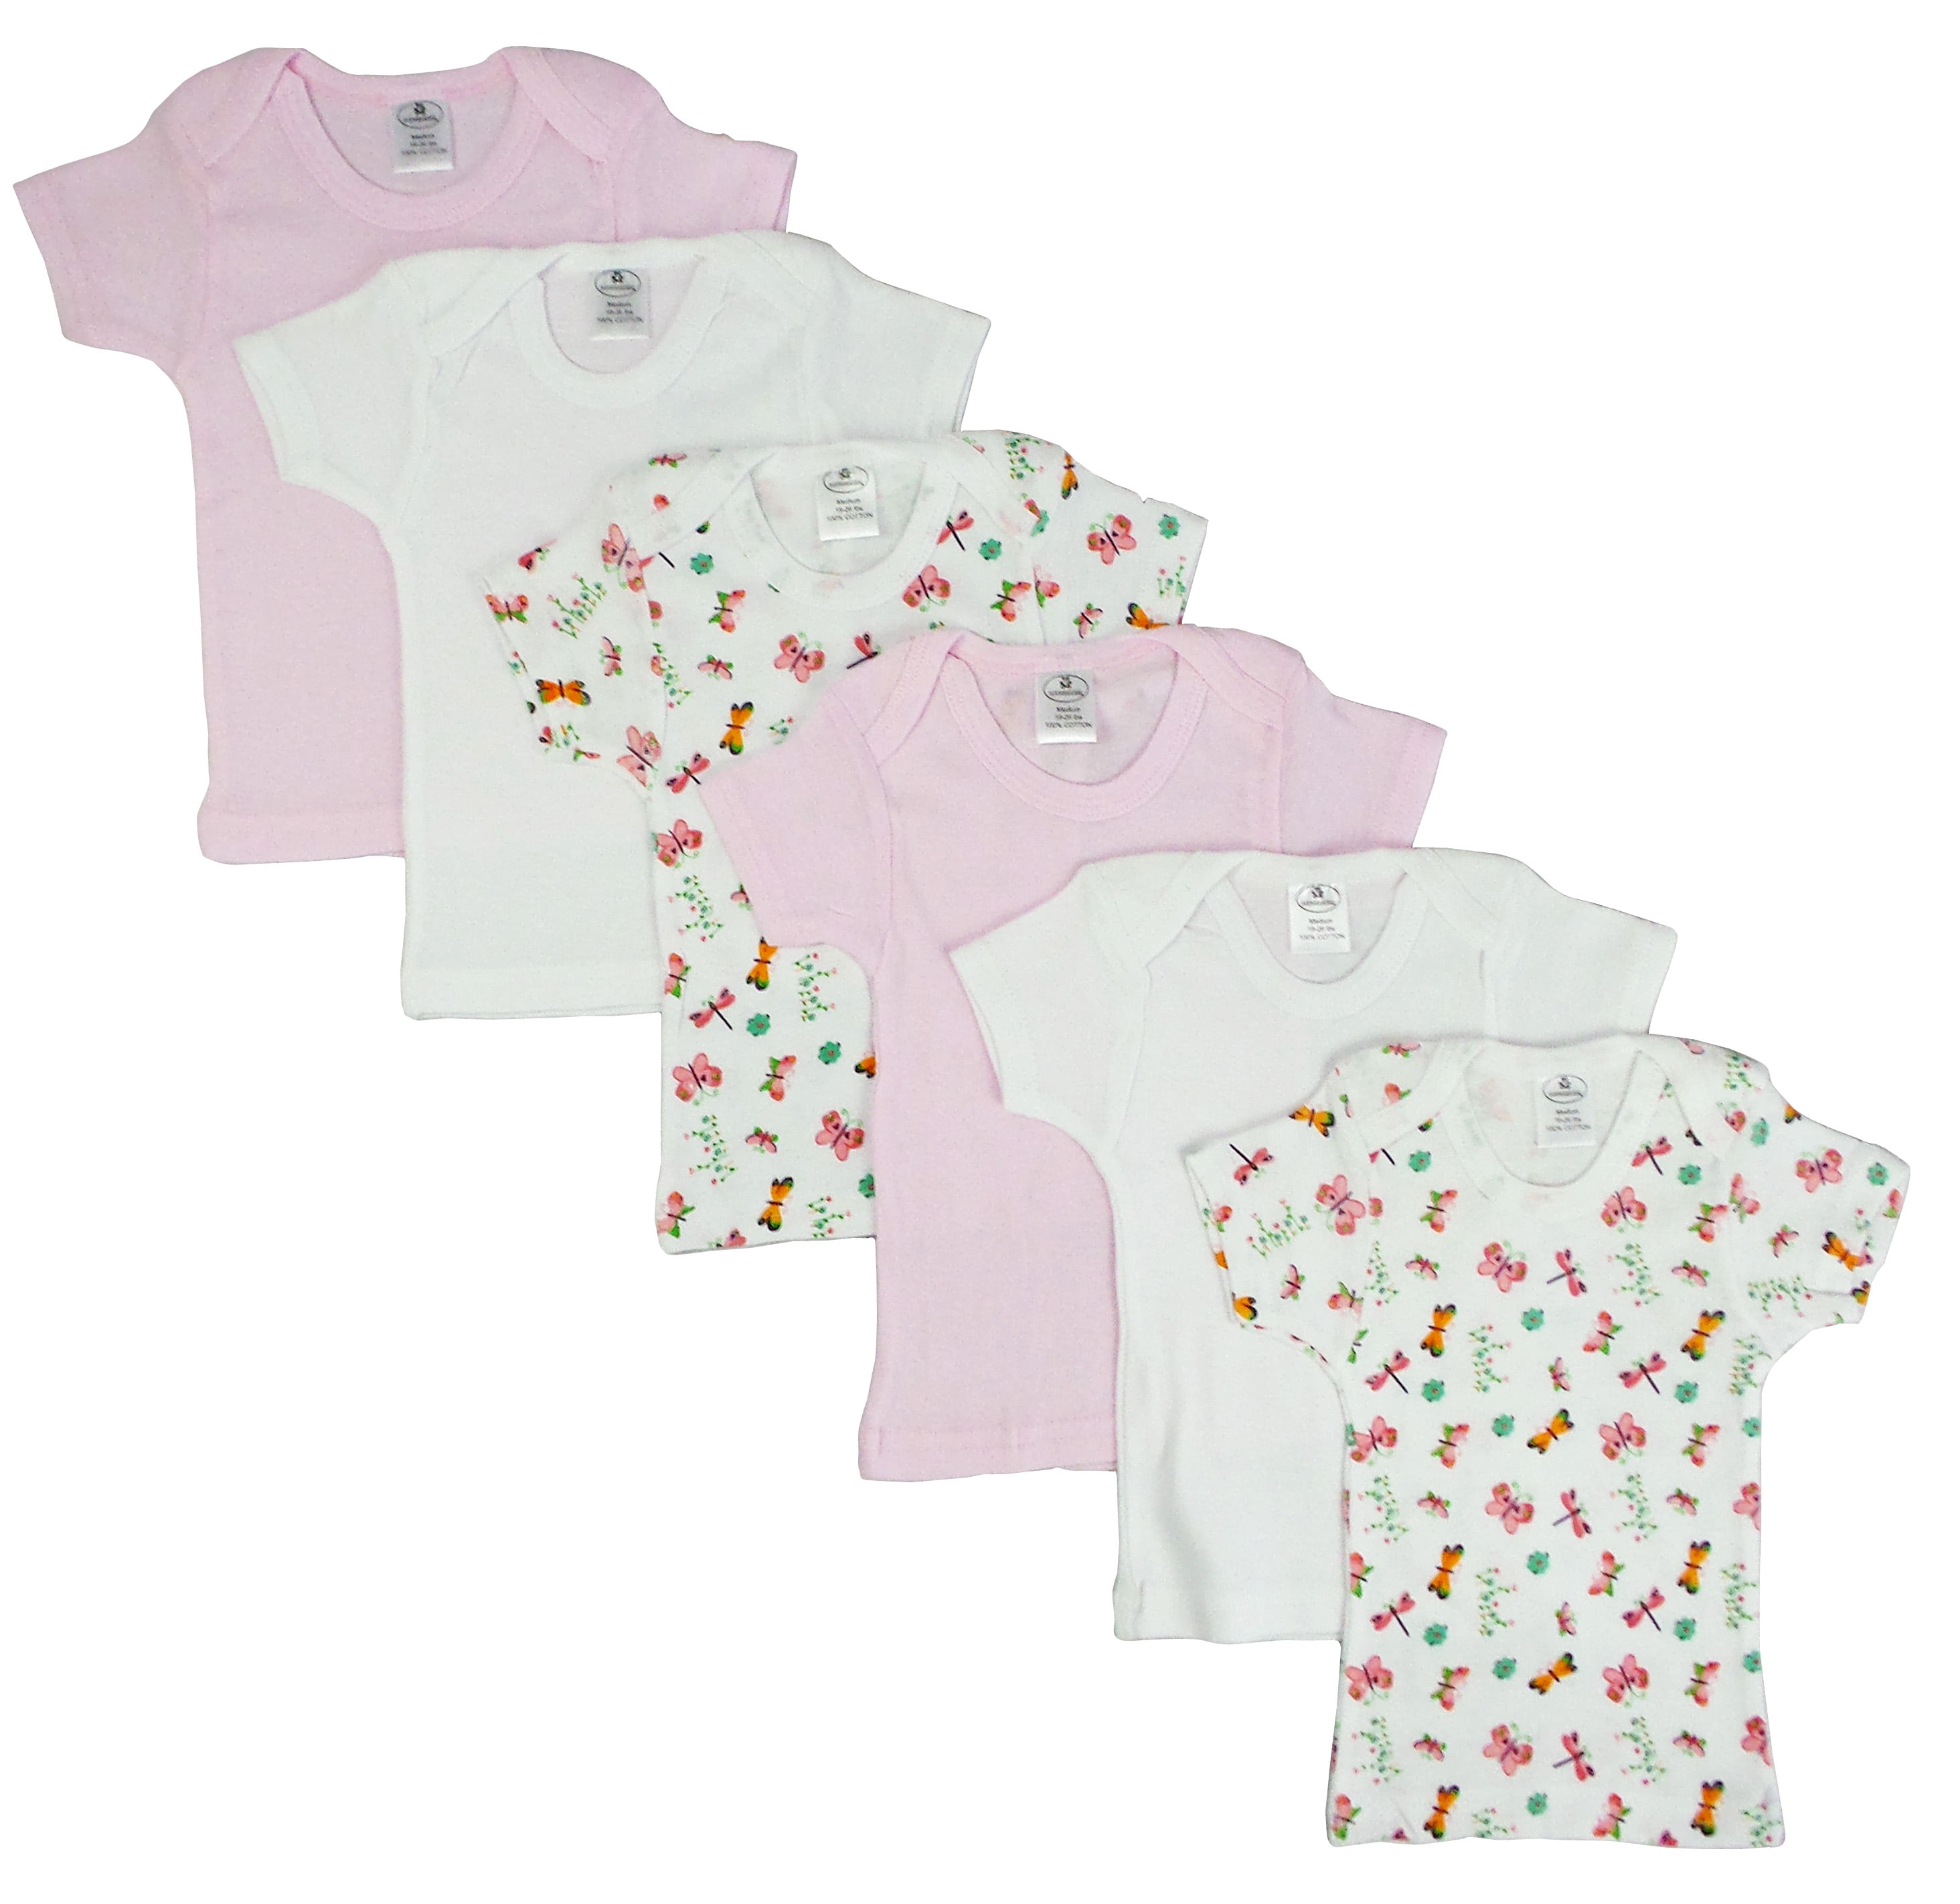 Girls Pastel Variety Short Sleeve Lap T-shirts, Assorted & Printed - Large